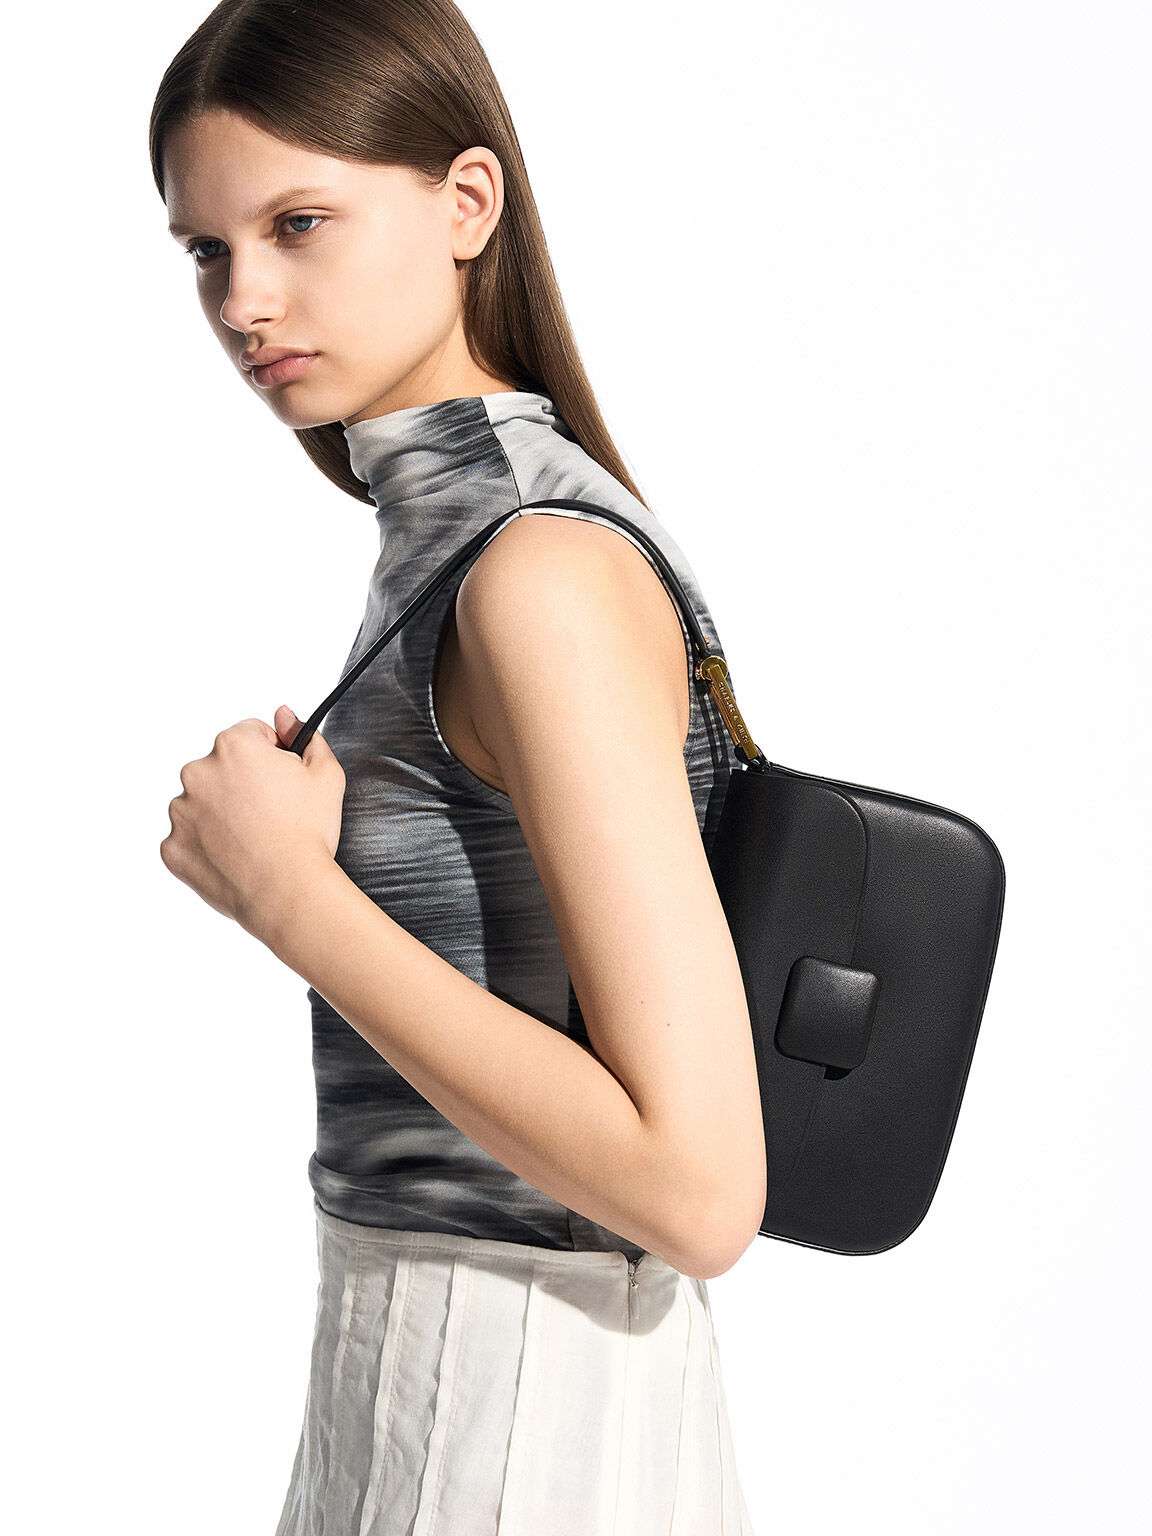 Koa Square Push-Lock Shoulder Bag, Black, hi-res